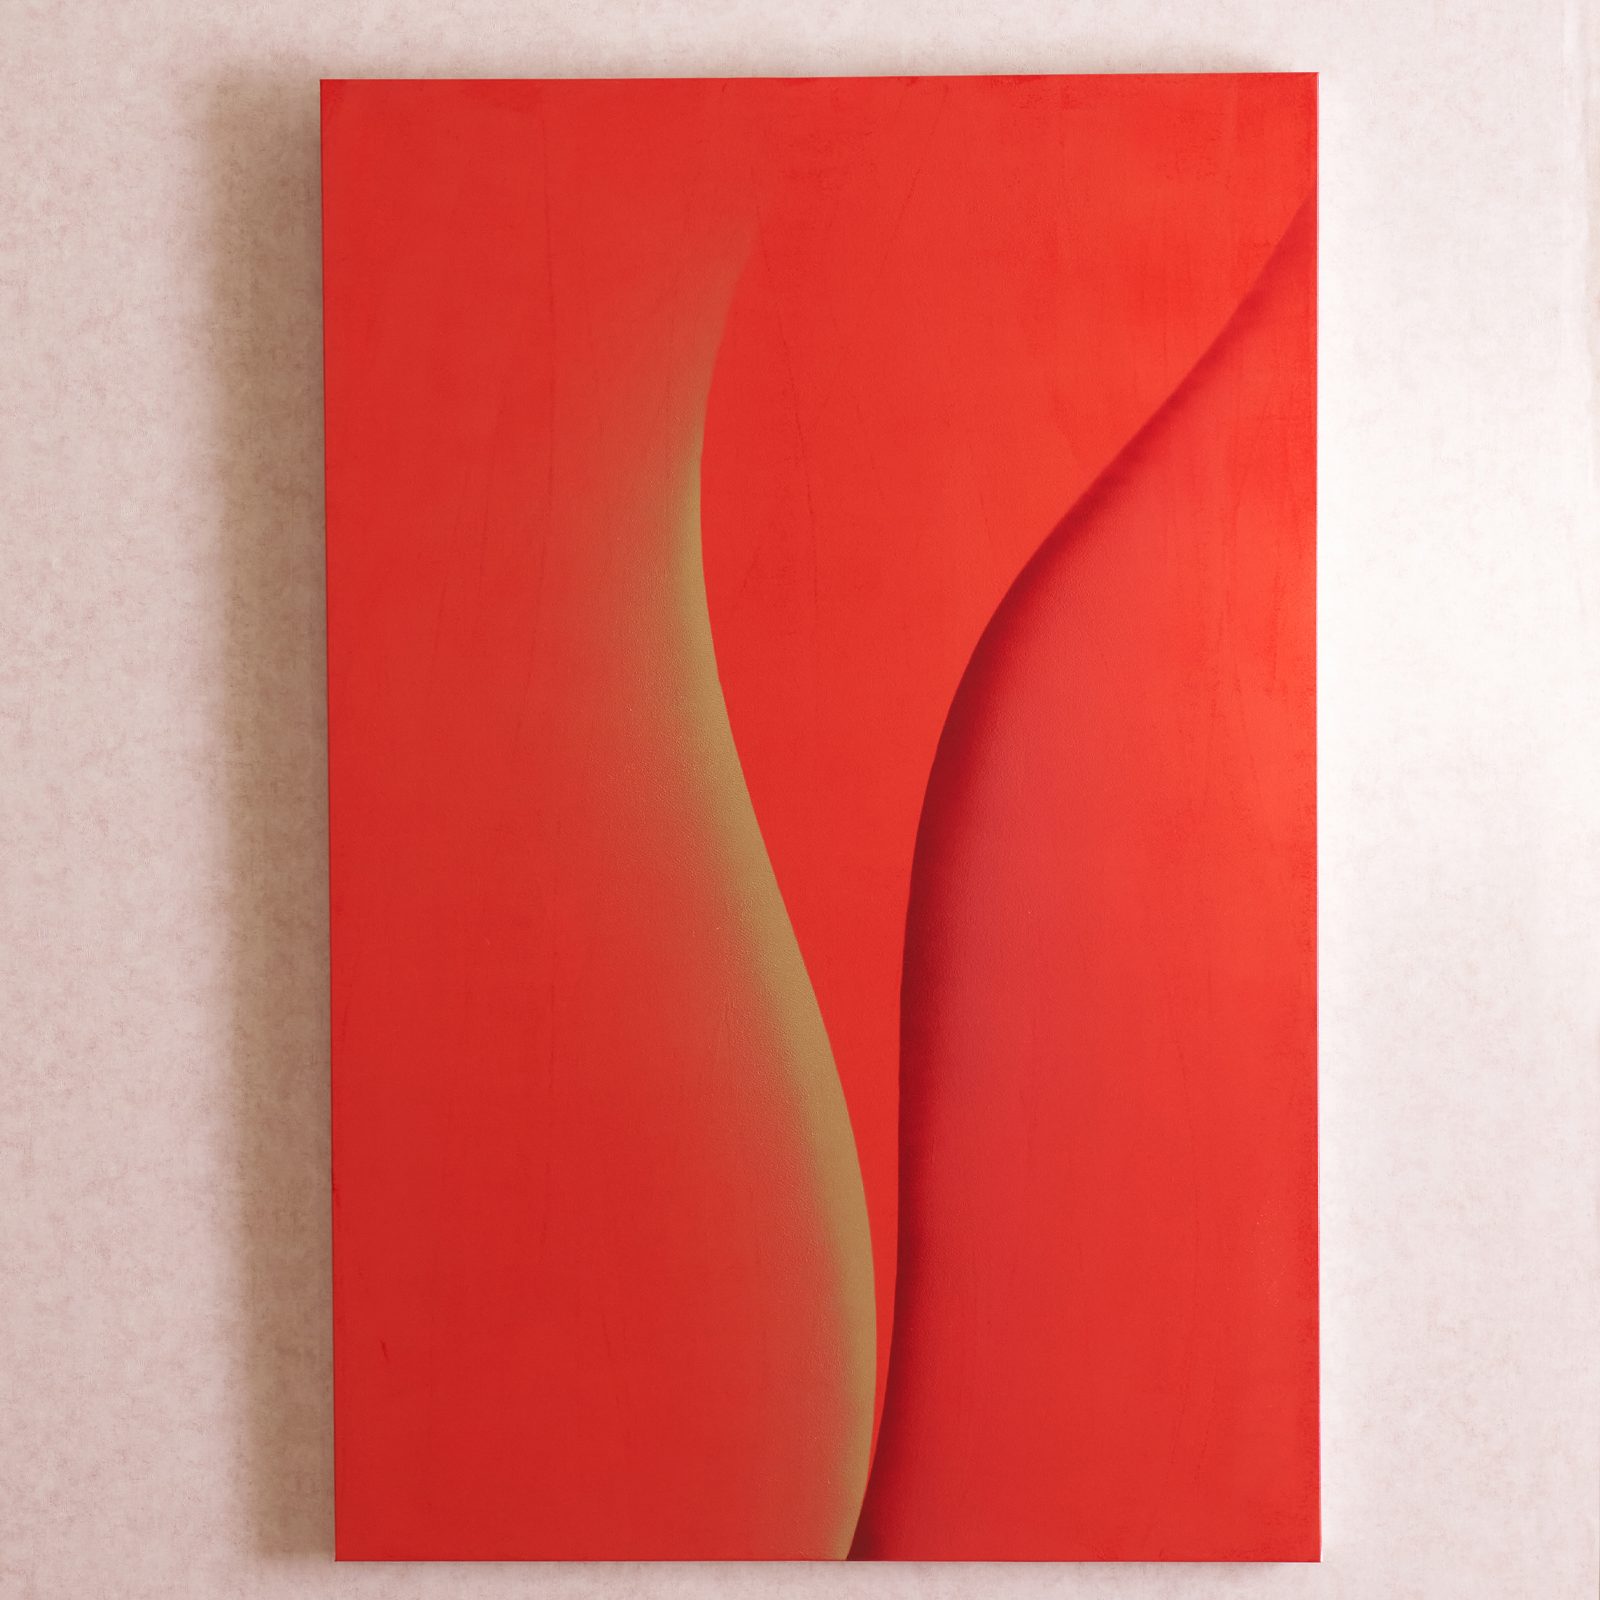 Red Portal V acrilyc canva painting_Veronica Mar_1800 x 1600